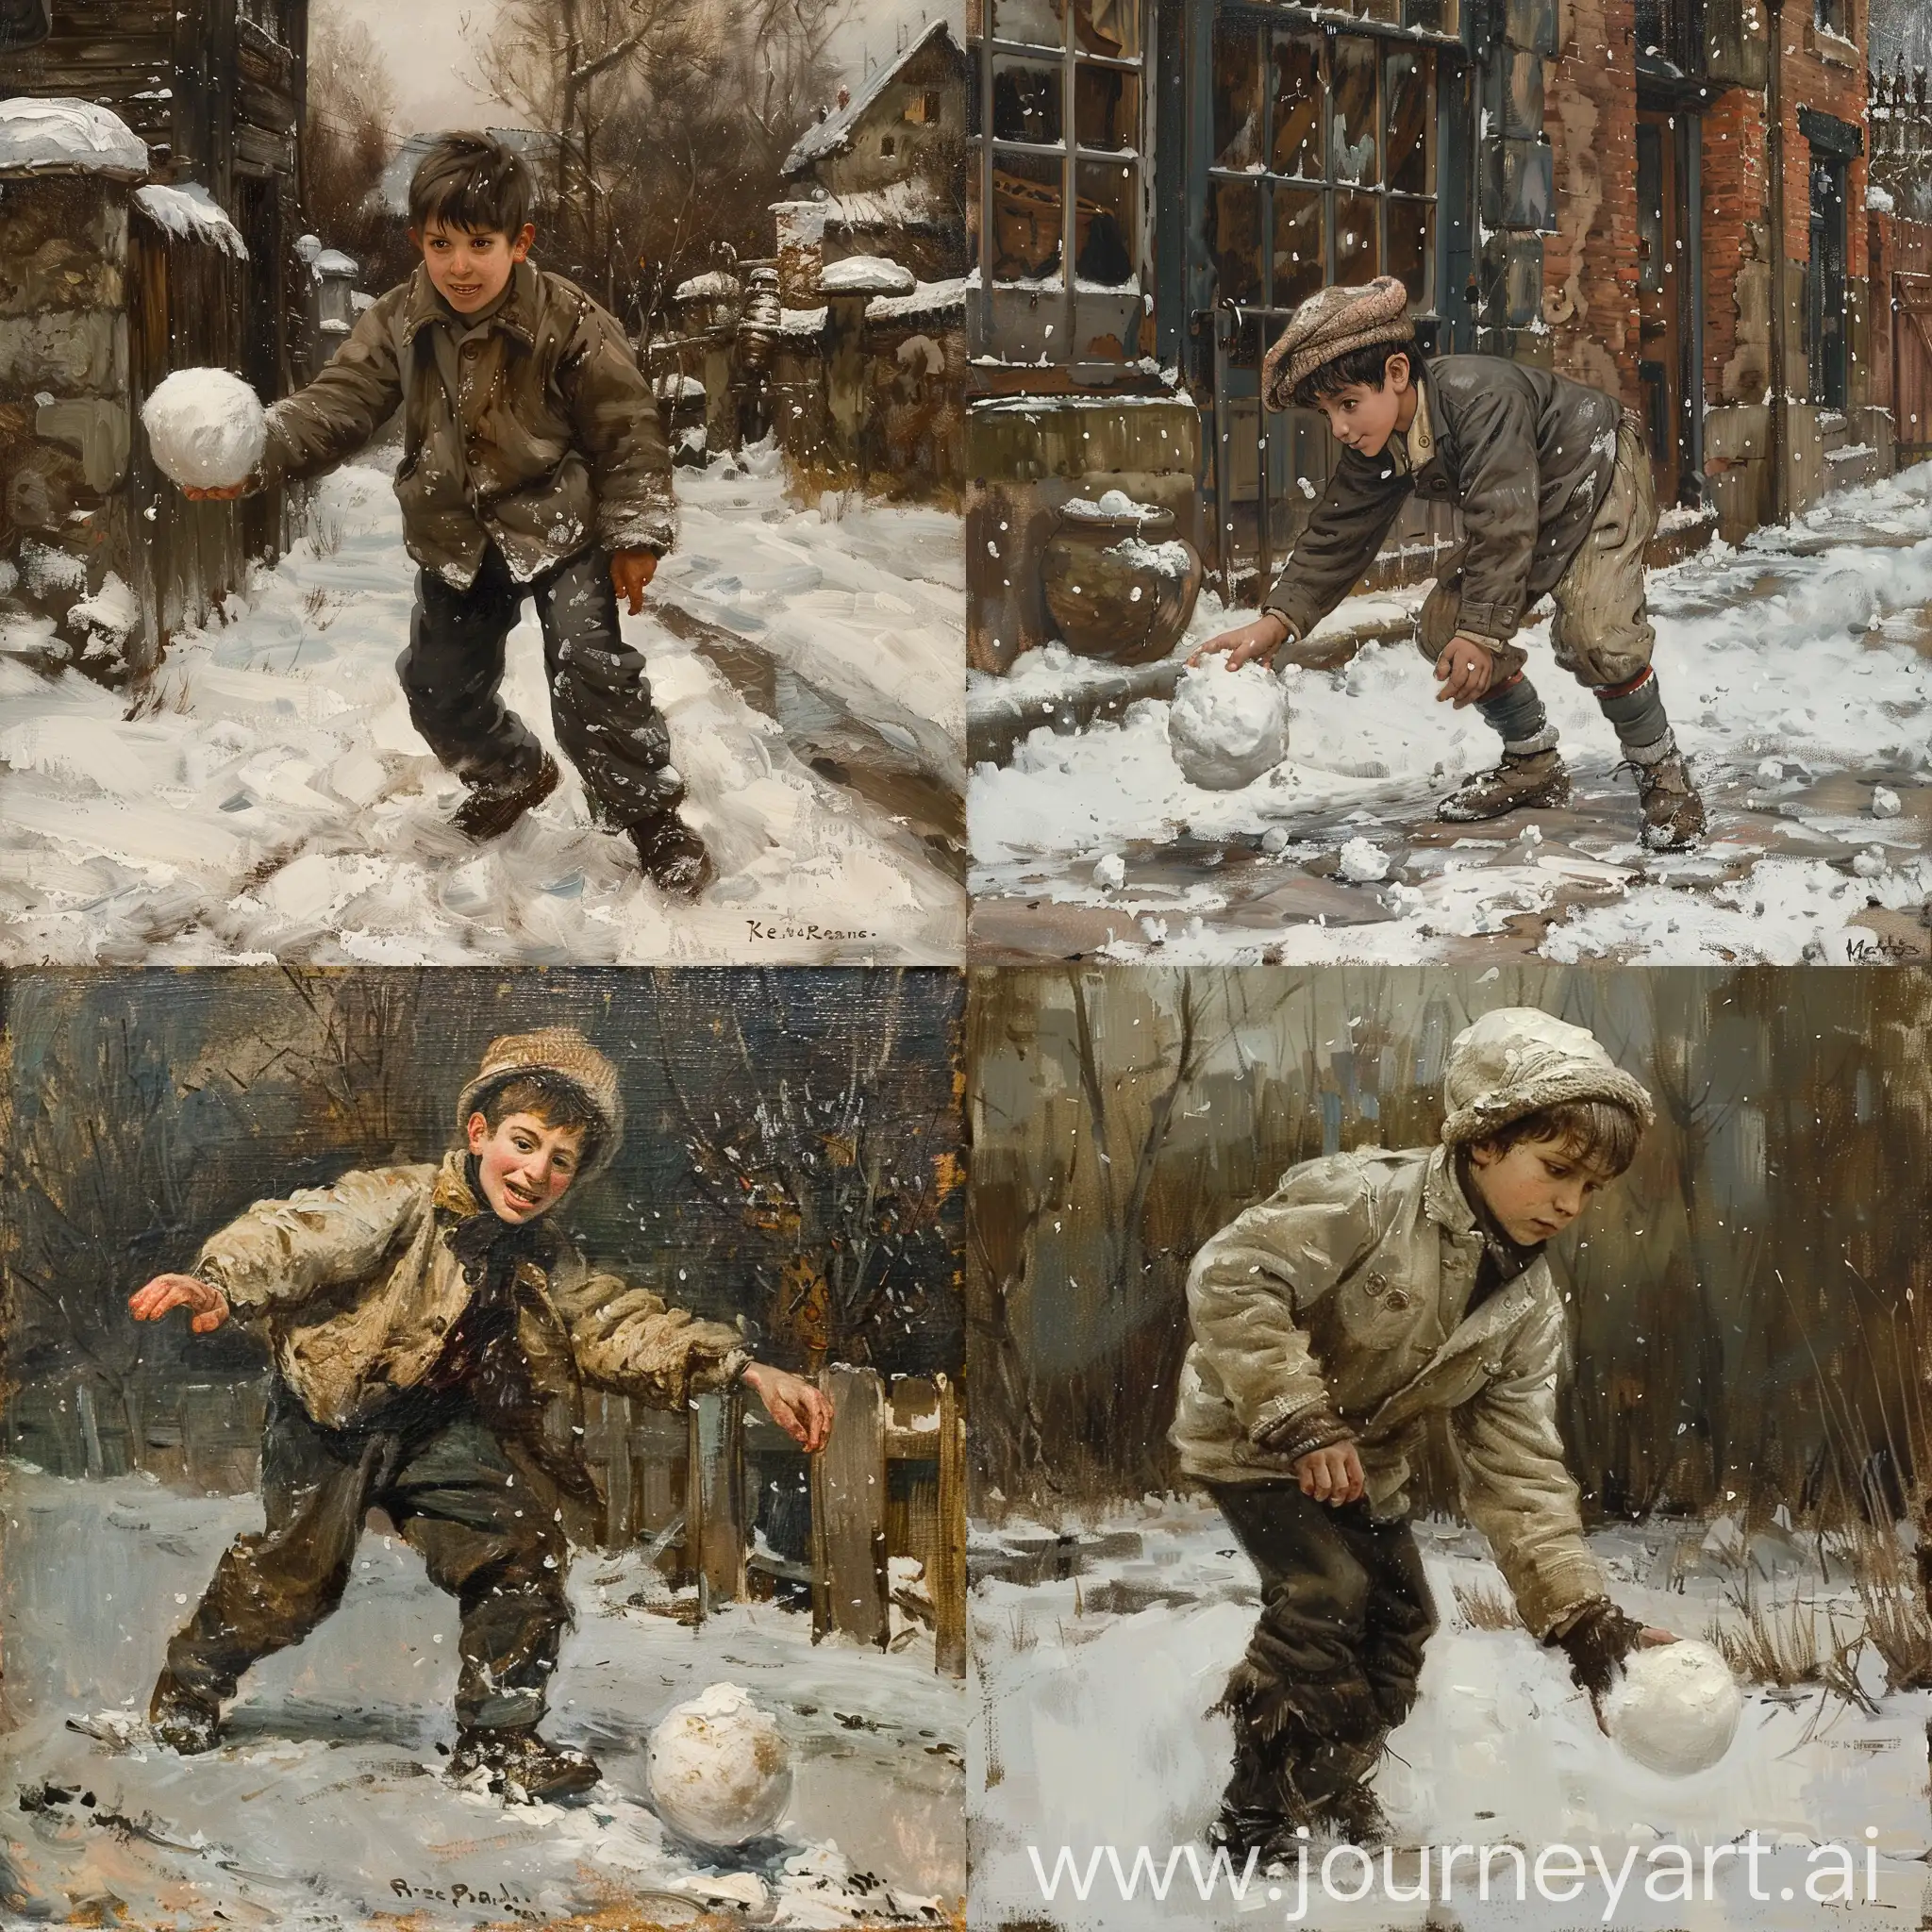 Joyful-Boy-Rolling-Snowball-in-Winter-Wonderland